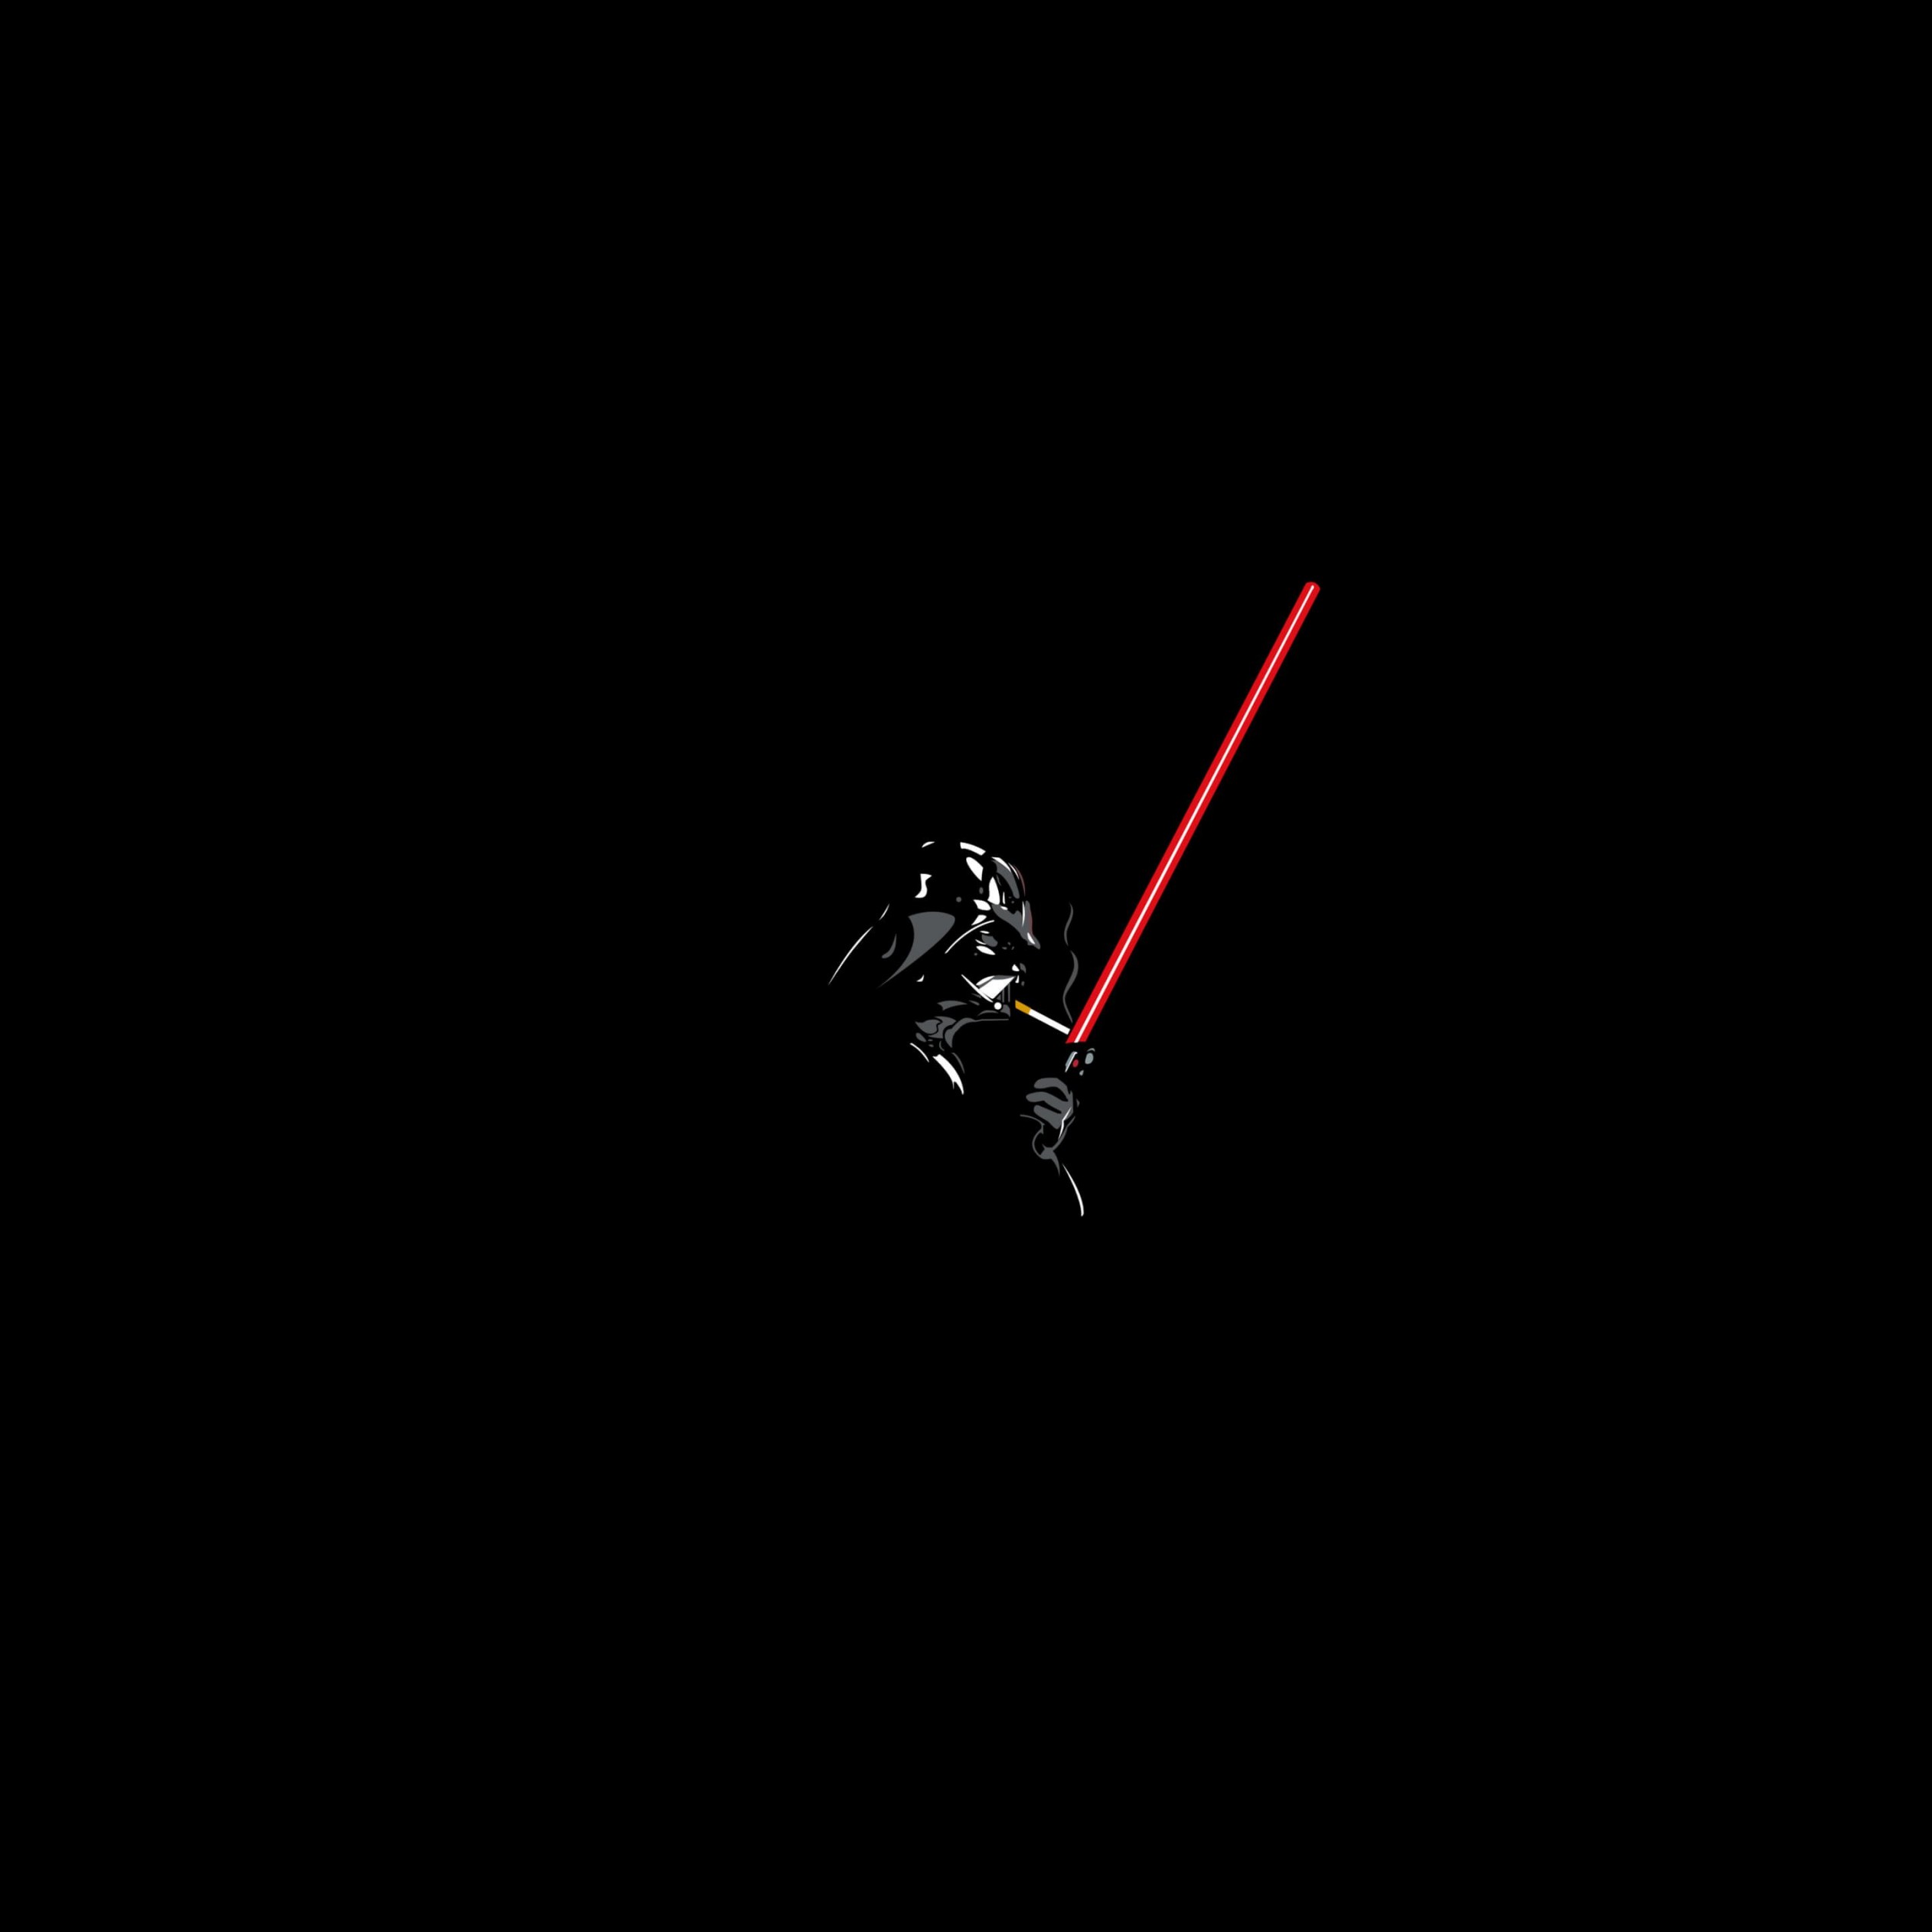 Darth Vader Lighting a Cigarette Wallpaper for Apple iPad 3